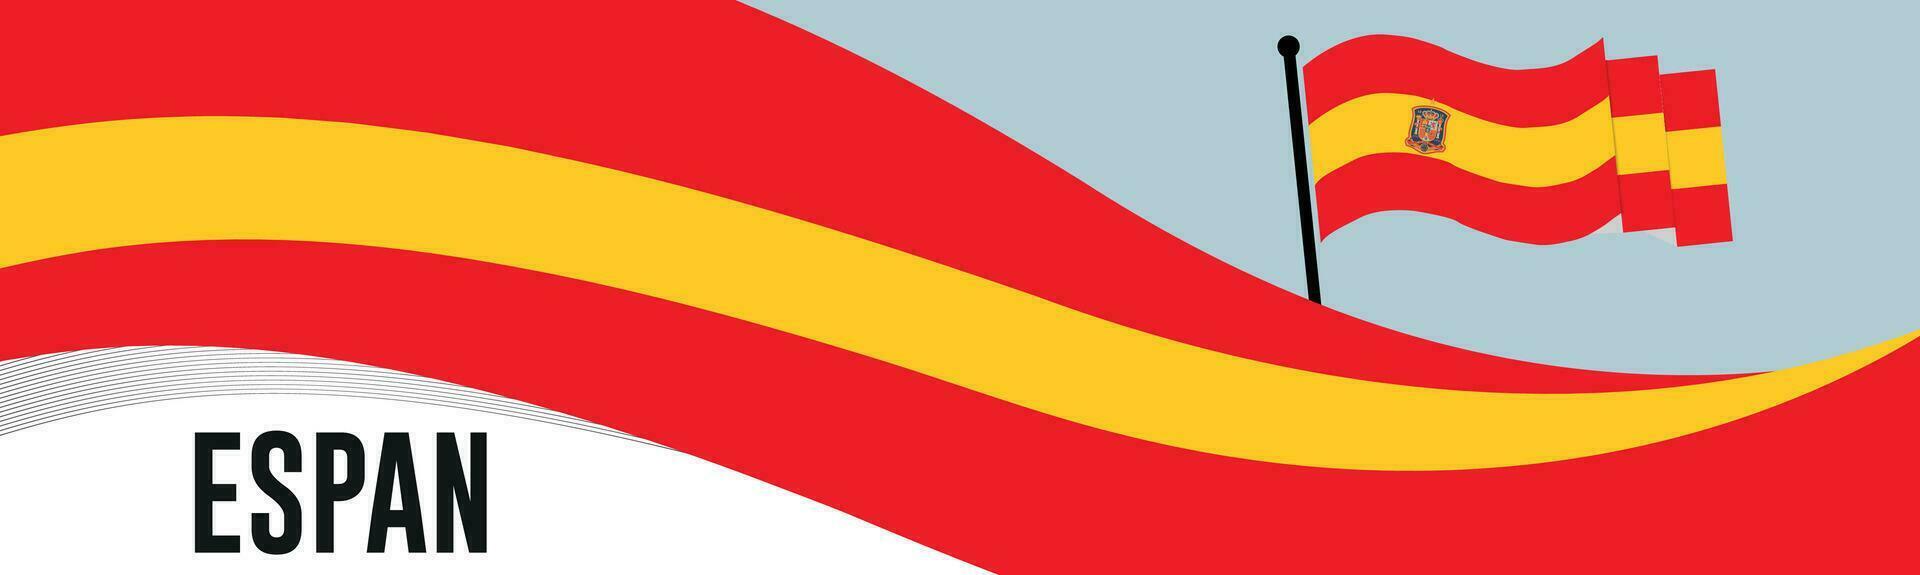 Espan happy National day celebration banner vector illustration